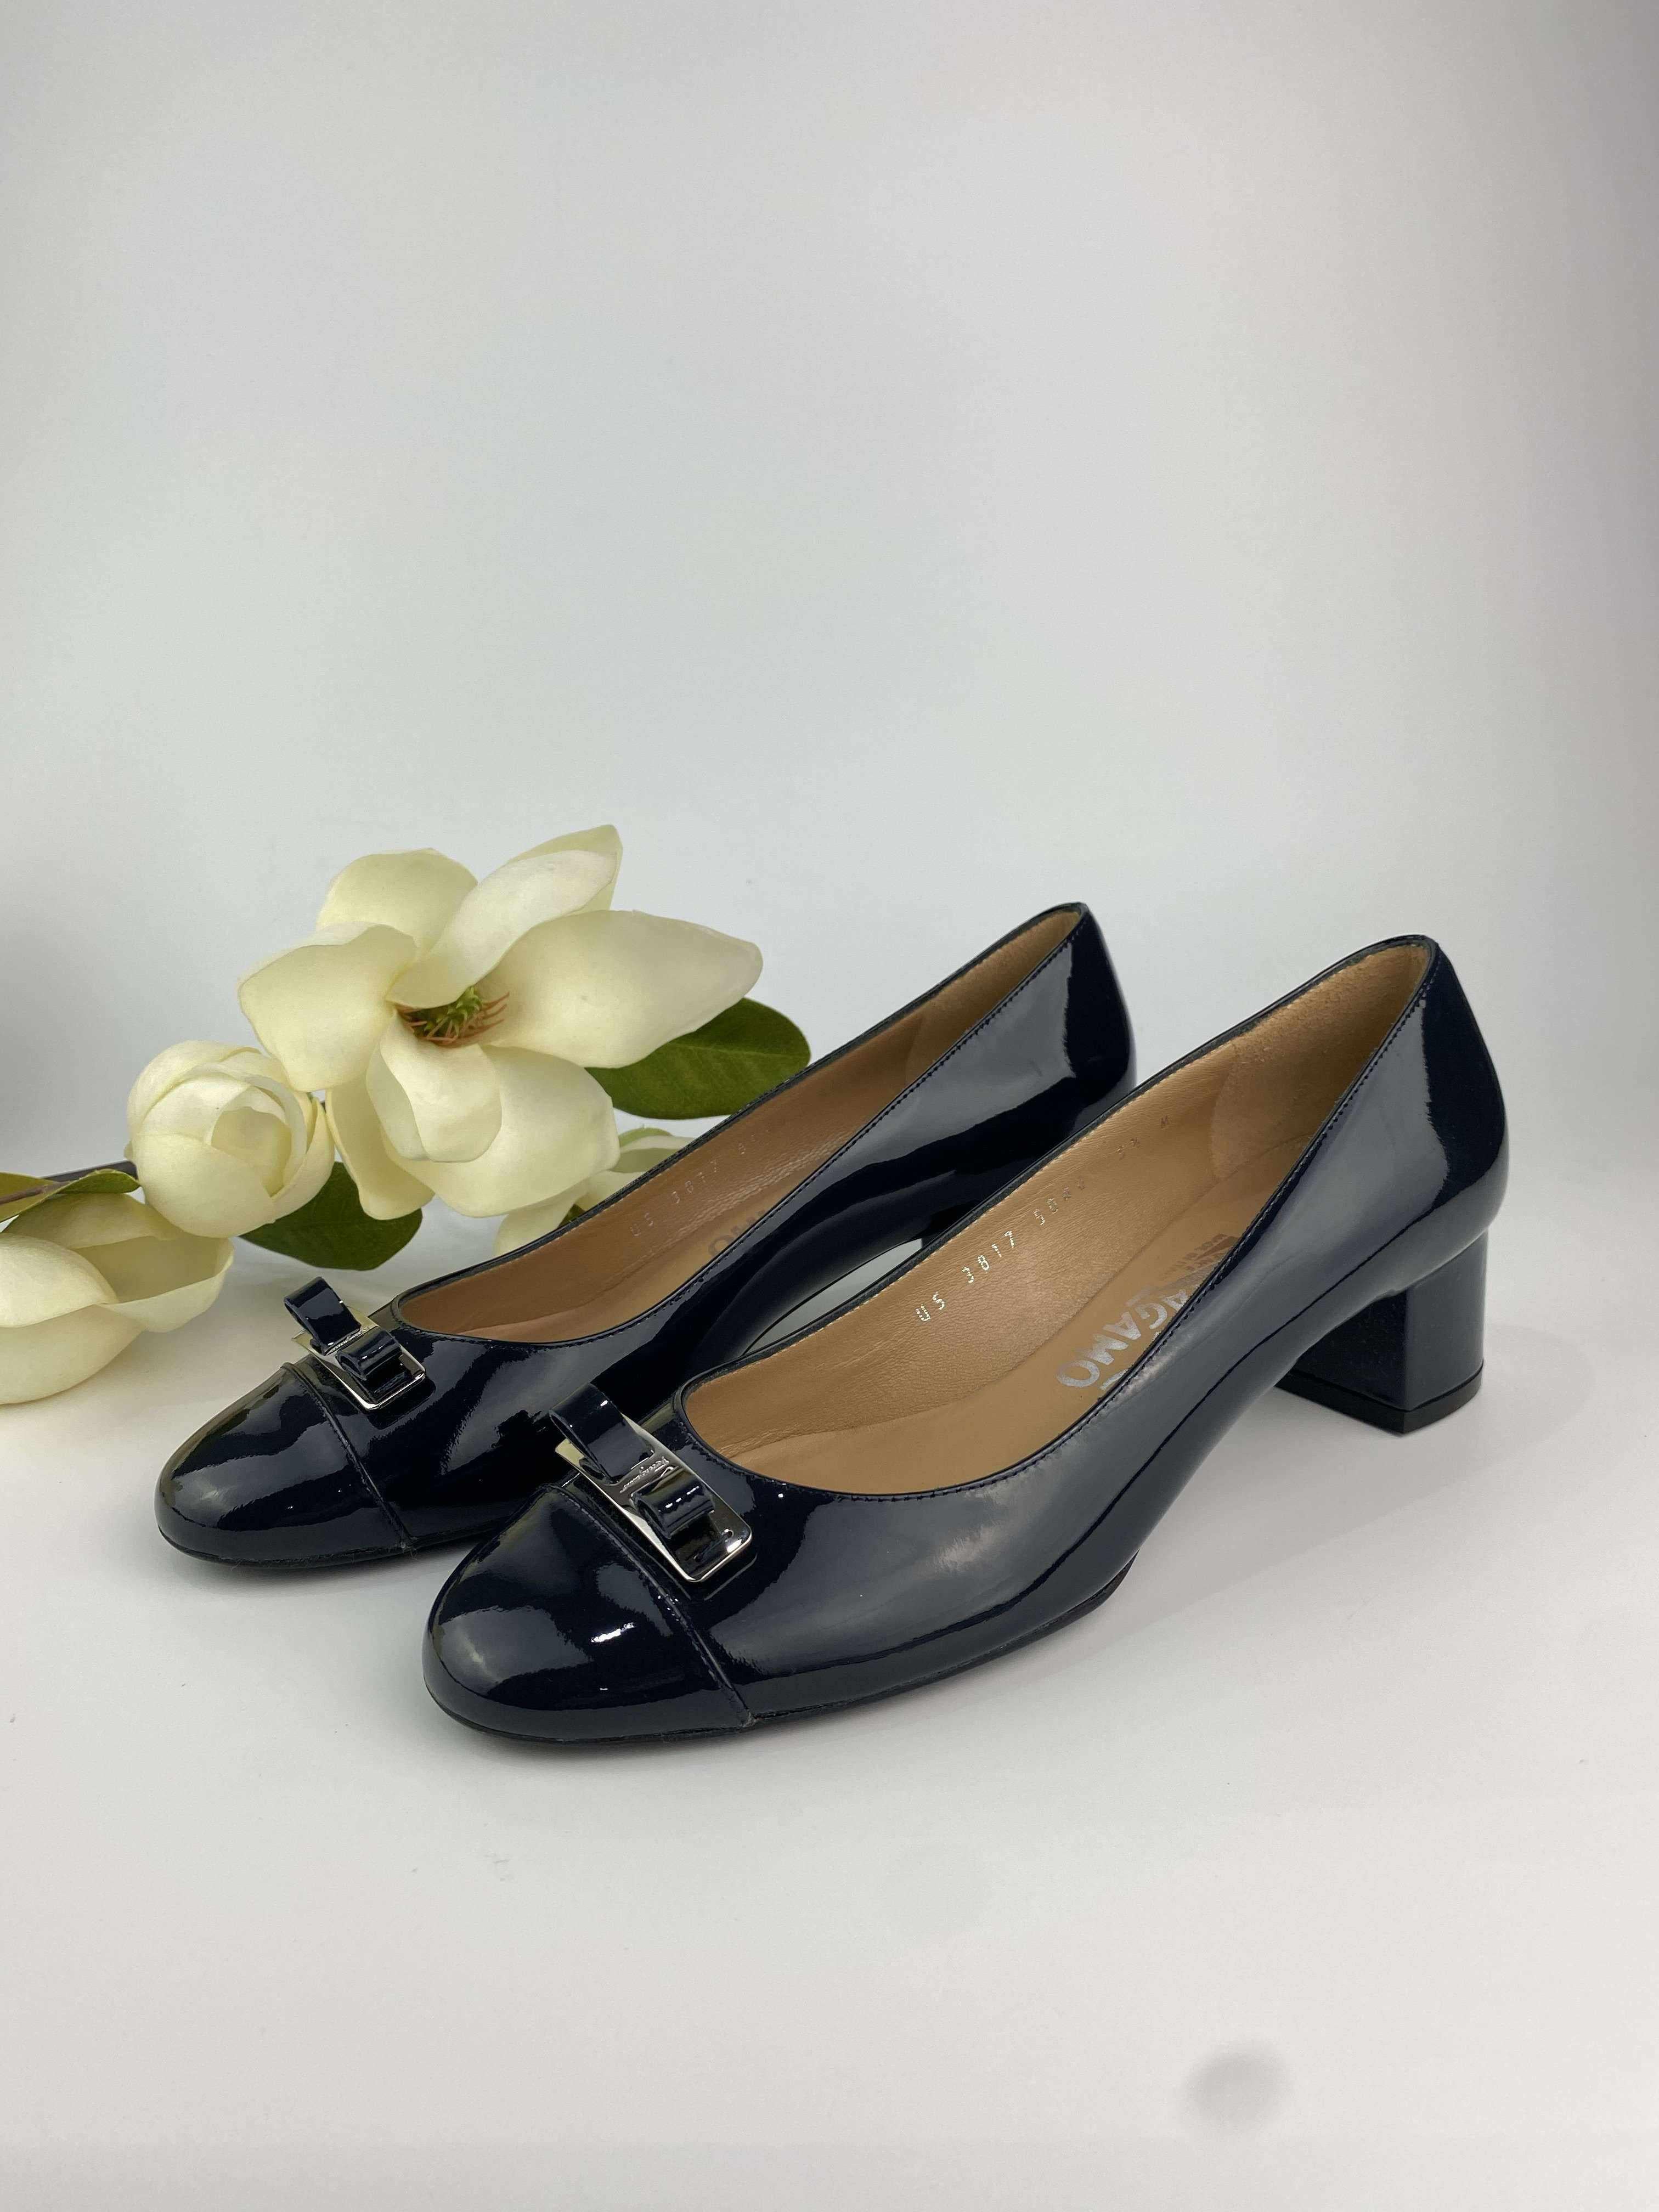 Salvatore Ferragamo low block heel patent leather shoes size 5.5 US